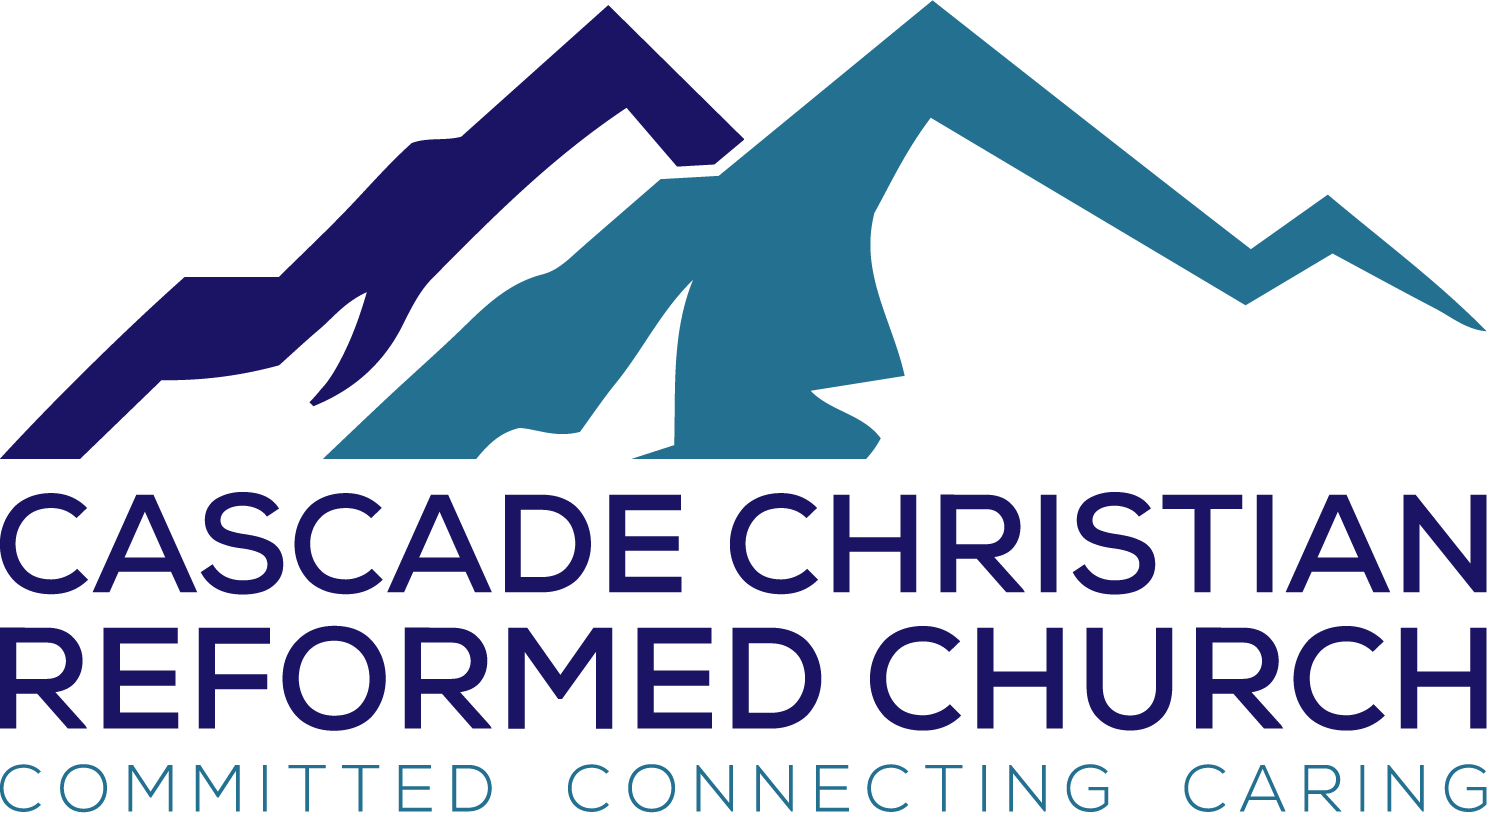 Cascade Christian Reformed Church